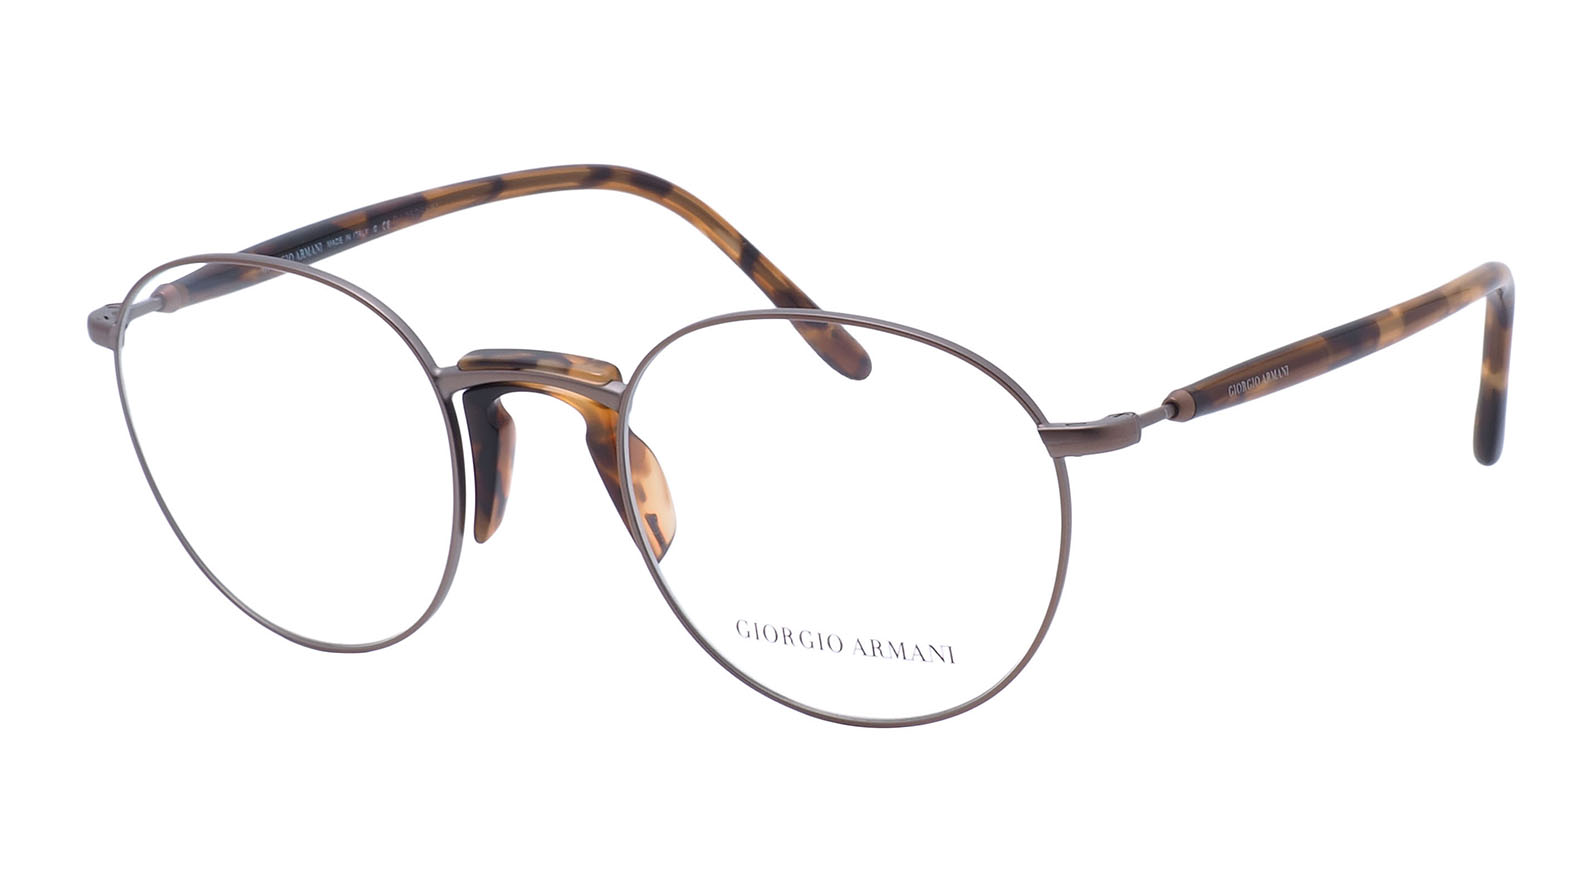 Giorgio Armani 5117 3006 карнавальный аксессуар очки волшебника